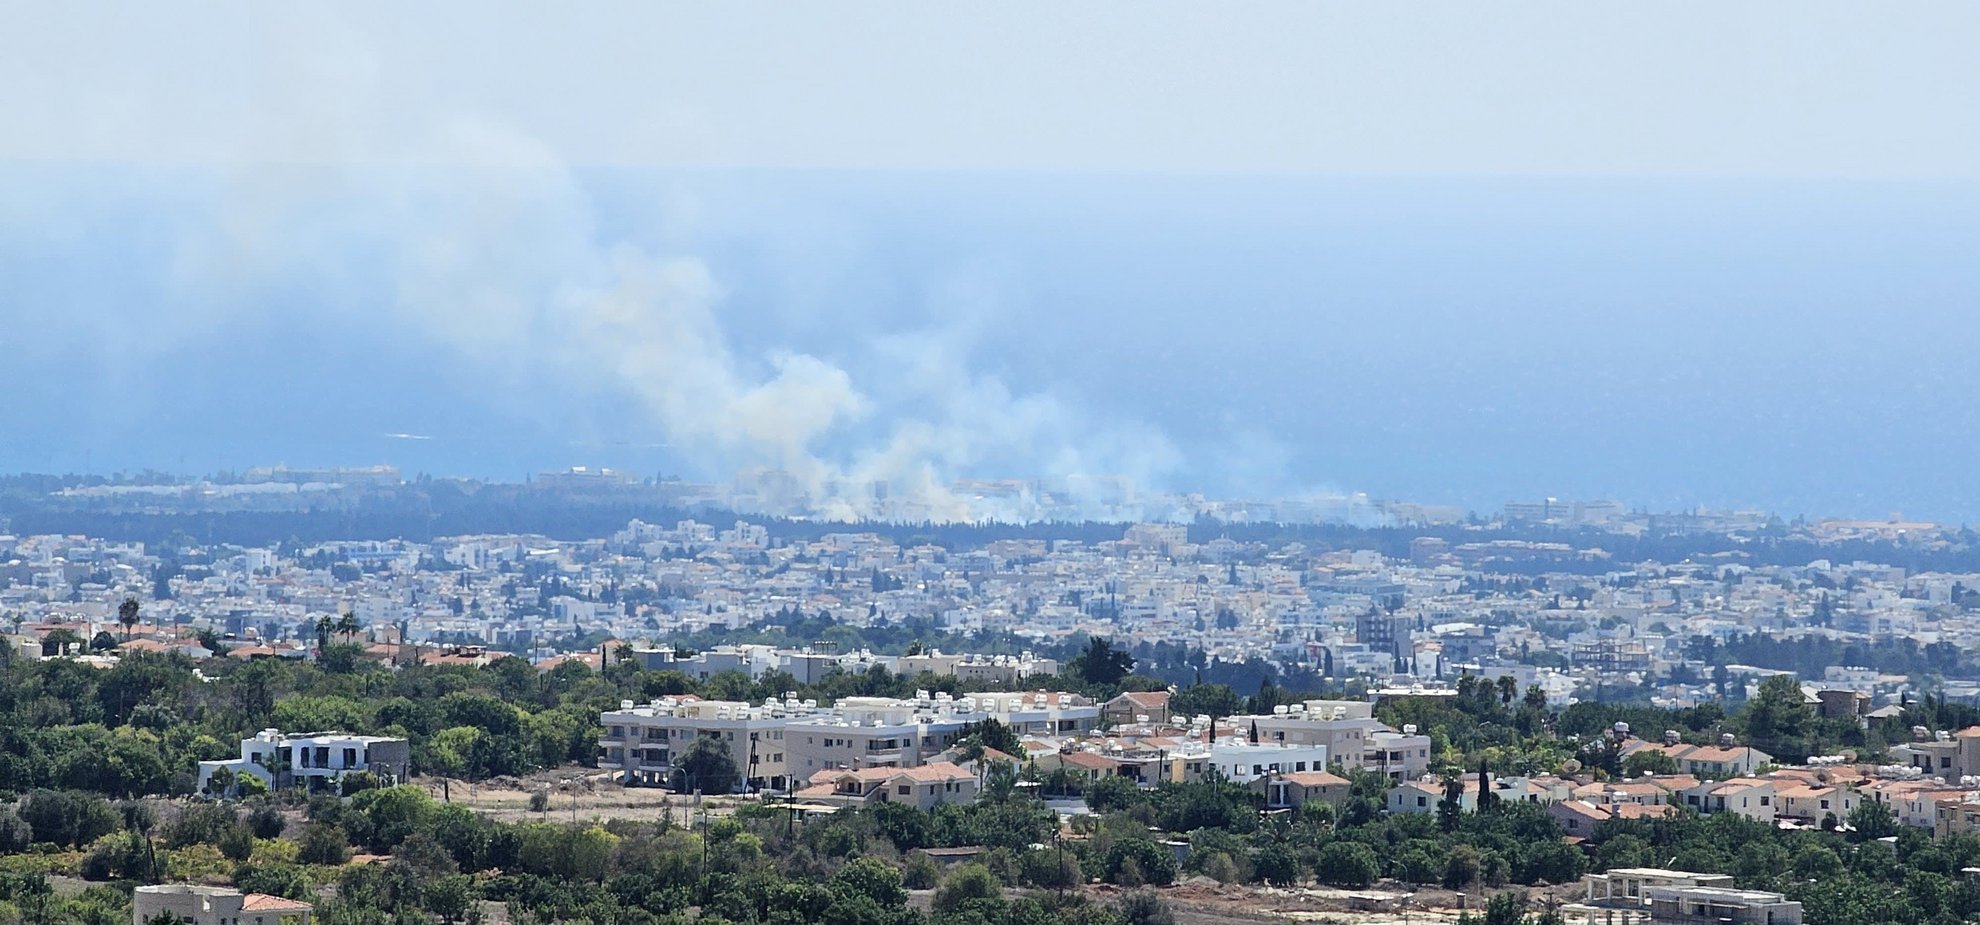 image Paphos fire brought under control